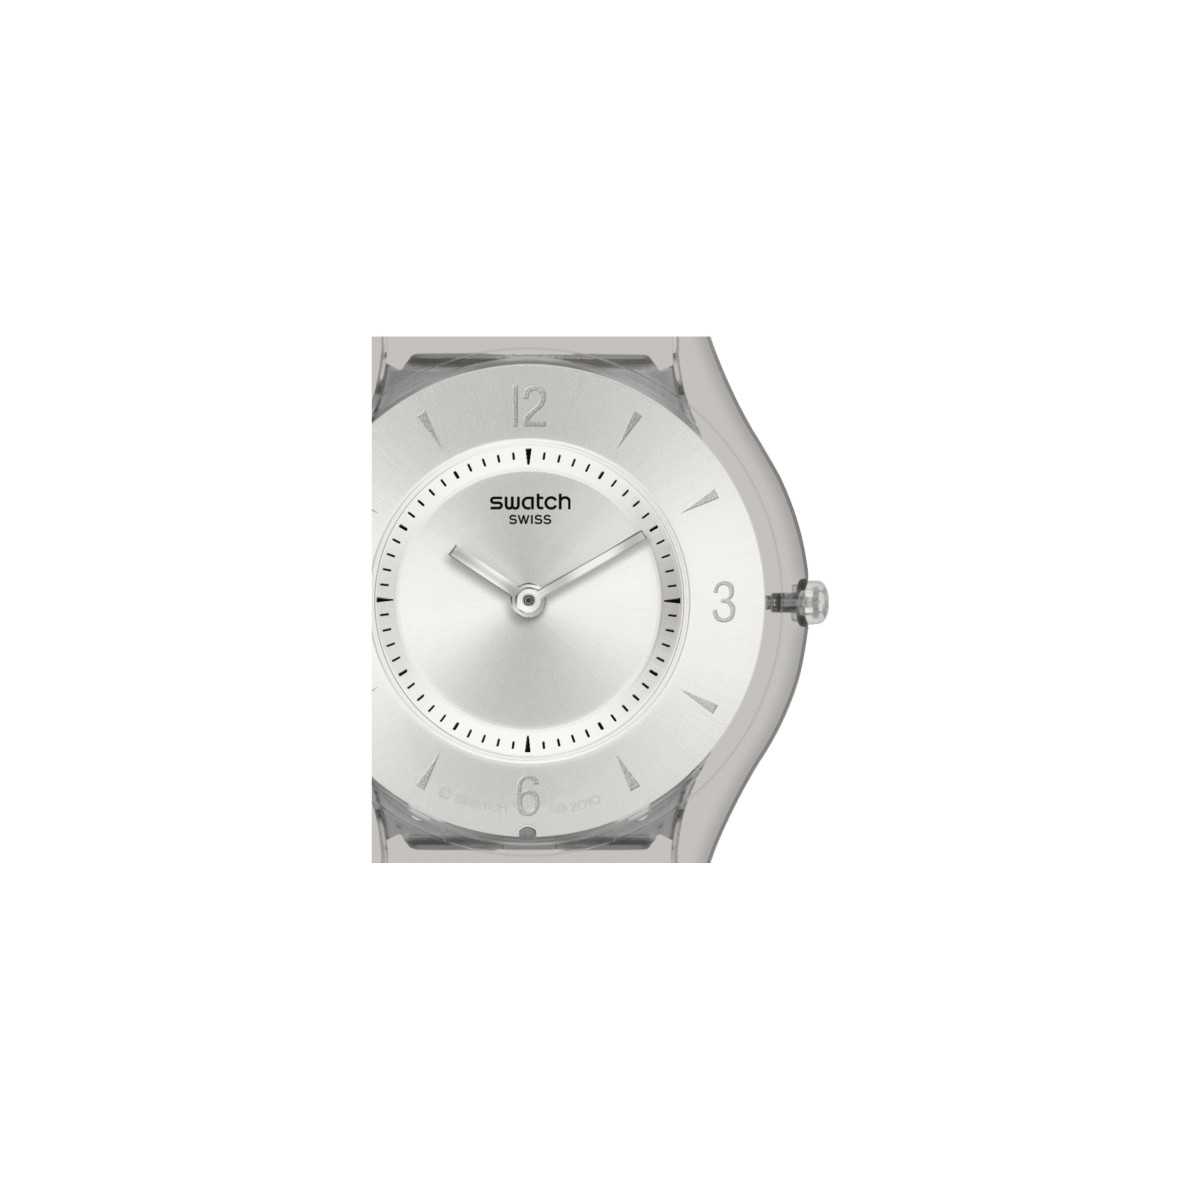 Reloj Swatch Metal Knit SS08M100M